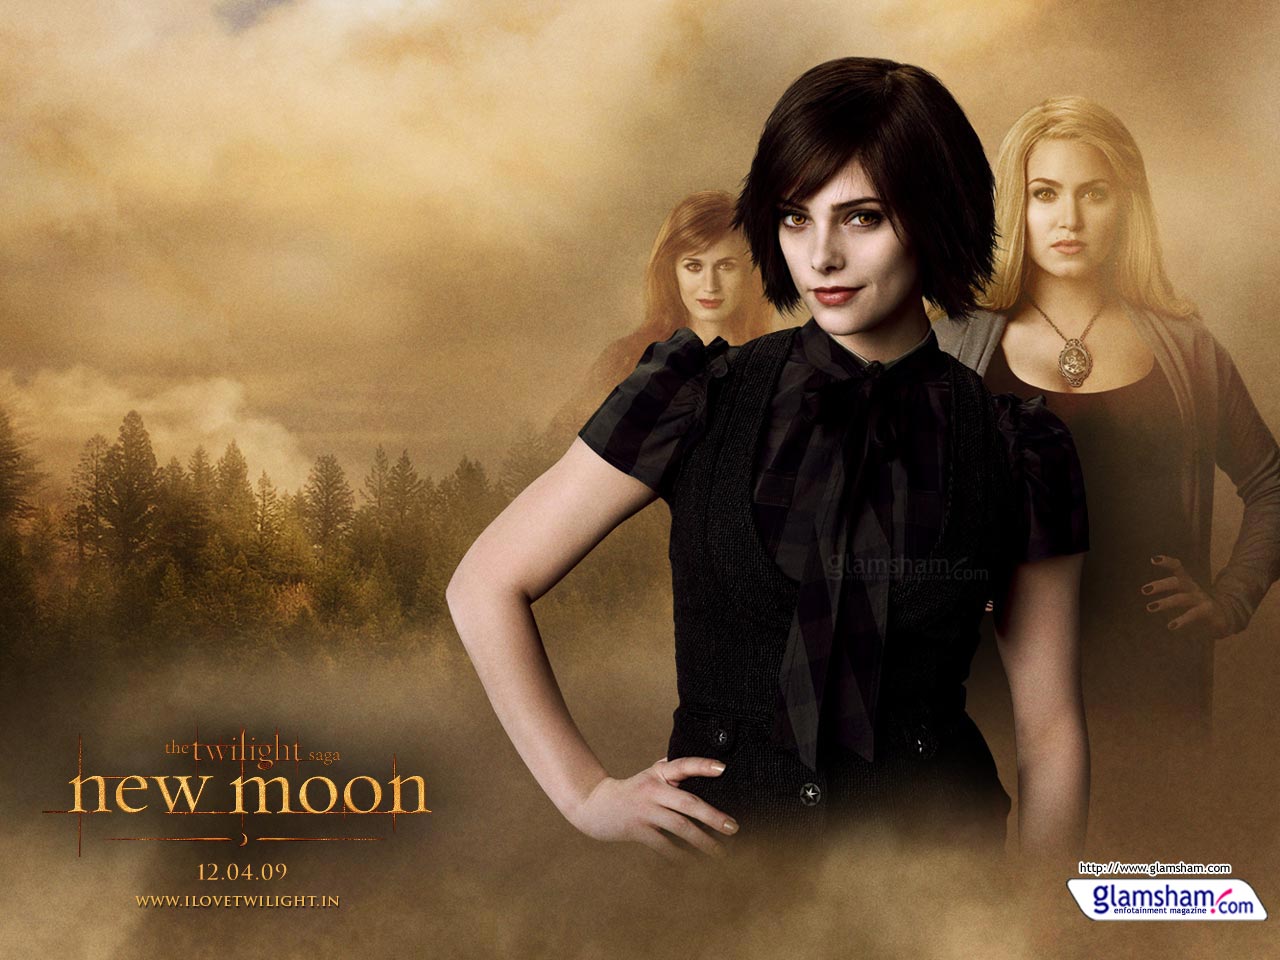 The Twilight Saga - New Moon movie wallpaper 21314 - Glamsham